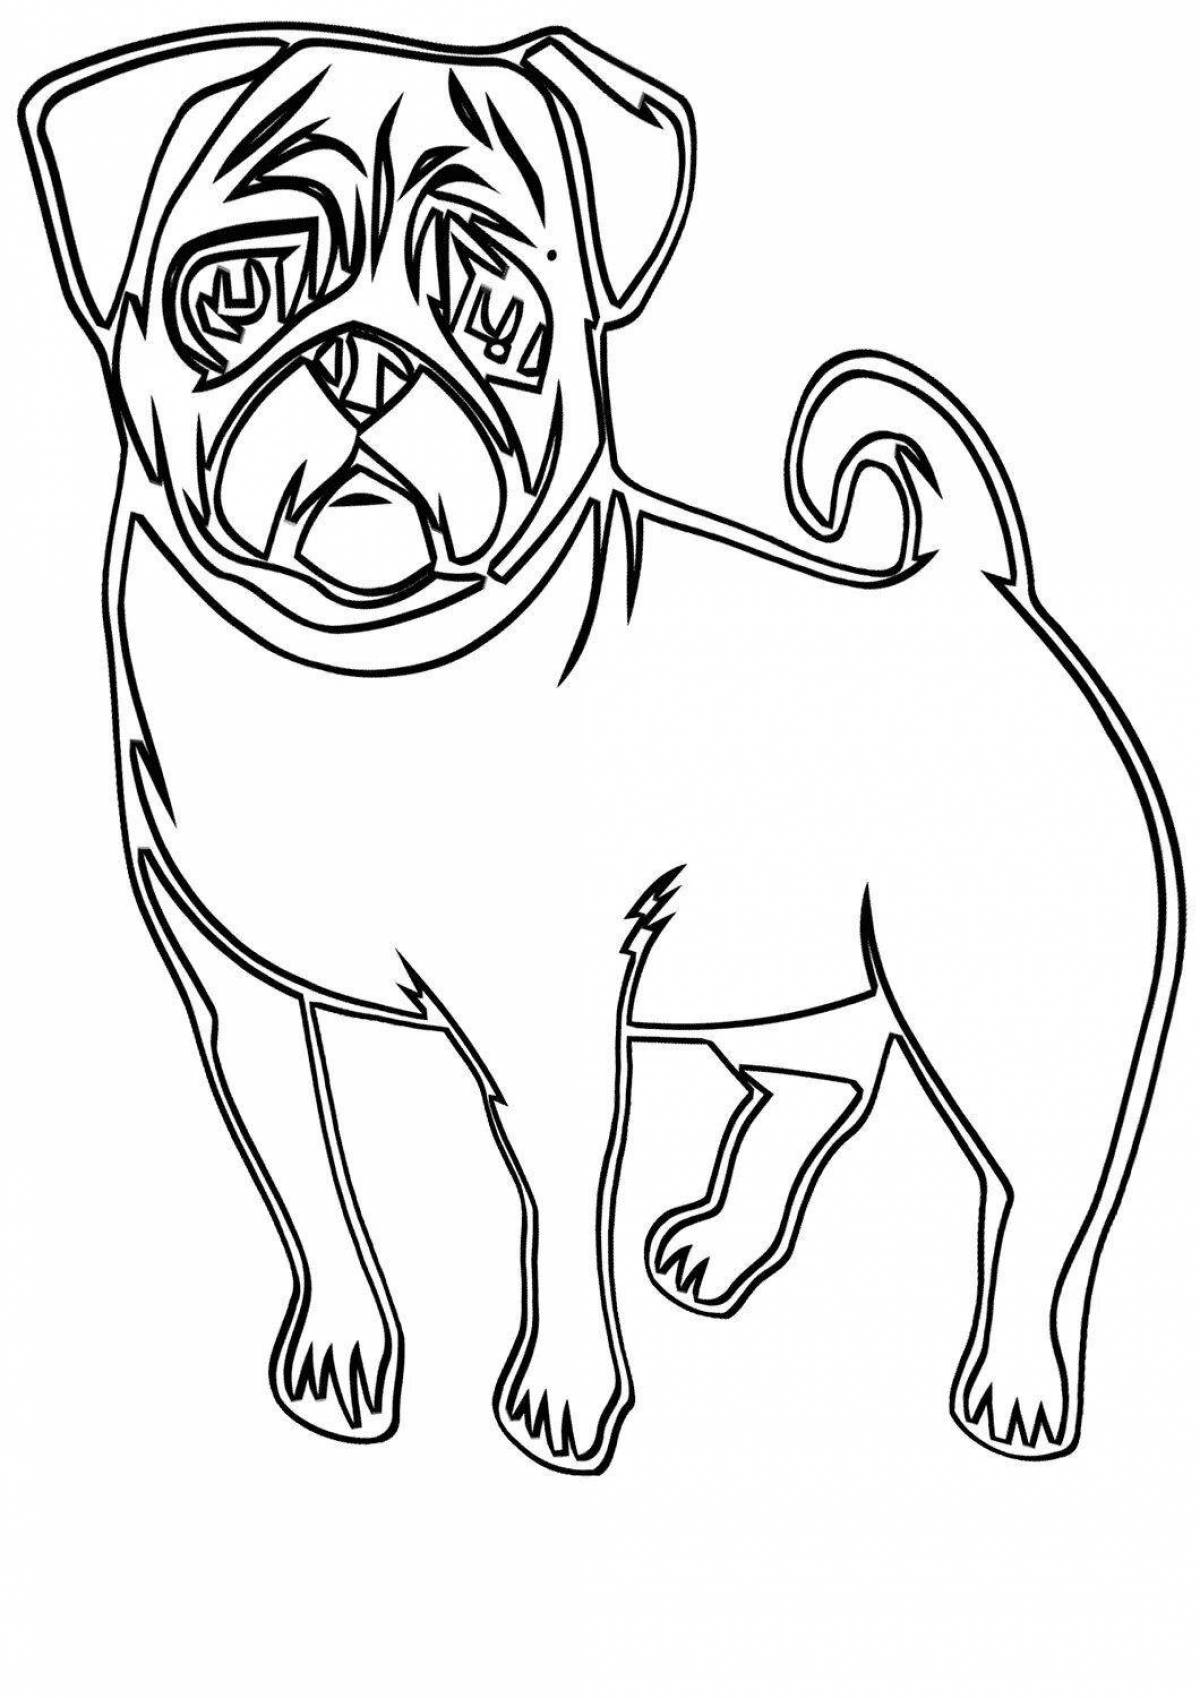 Coloring page mischievous pug